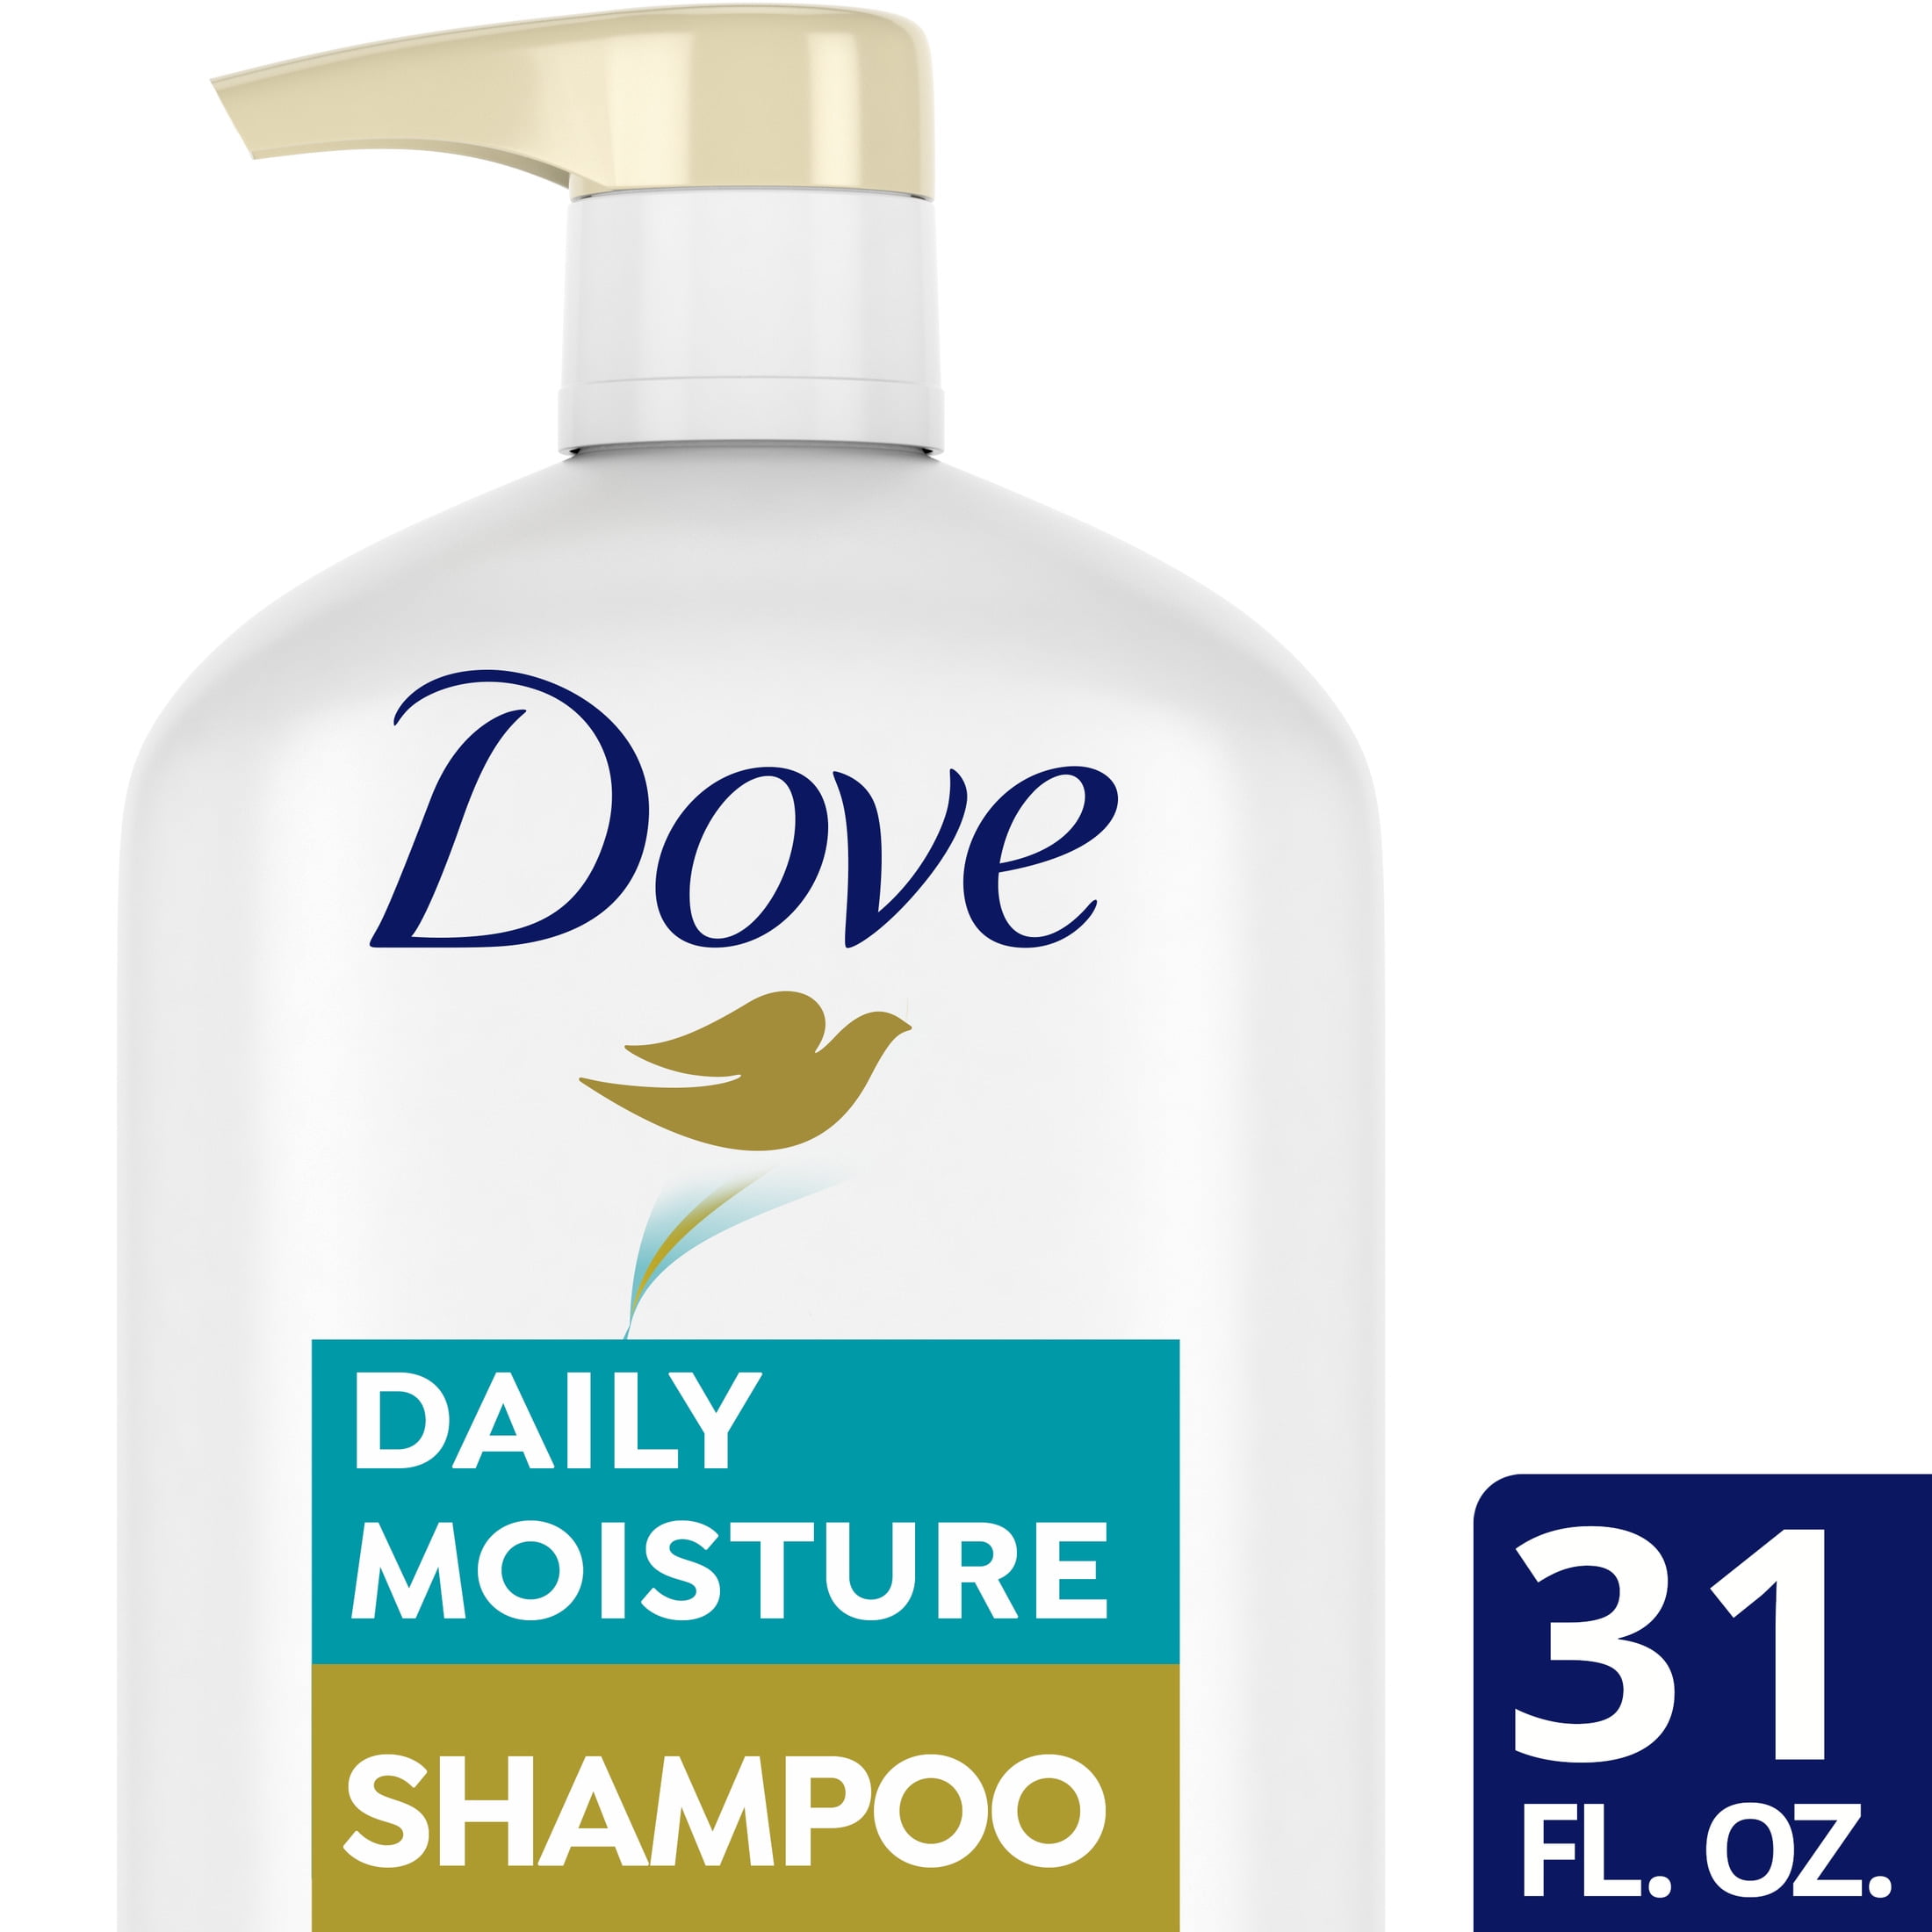 Dove Moisturizing Shampoo, Nutritive Solutions Daily Moisture for All Hair Types, 31 fl oz